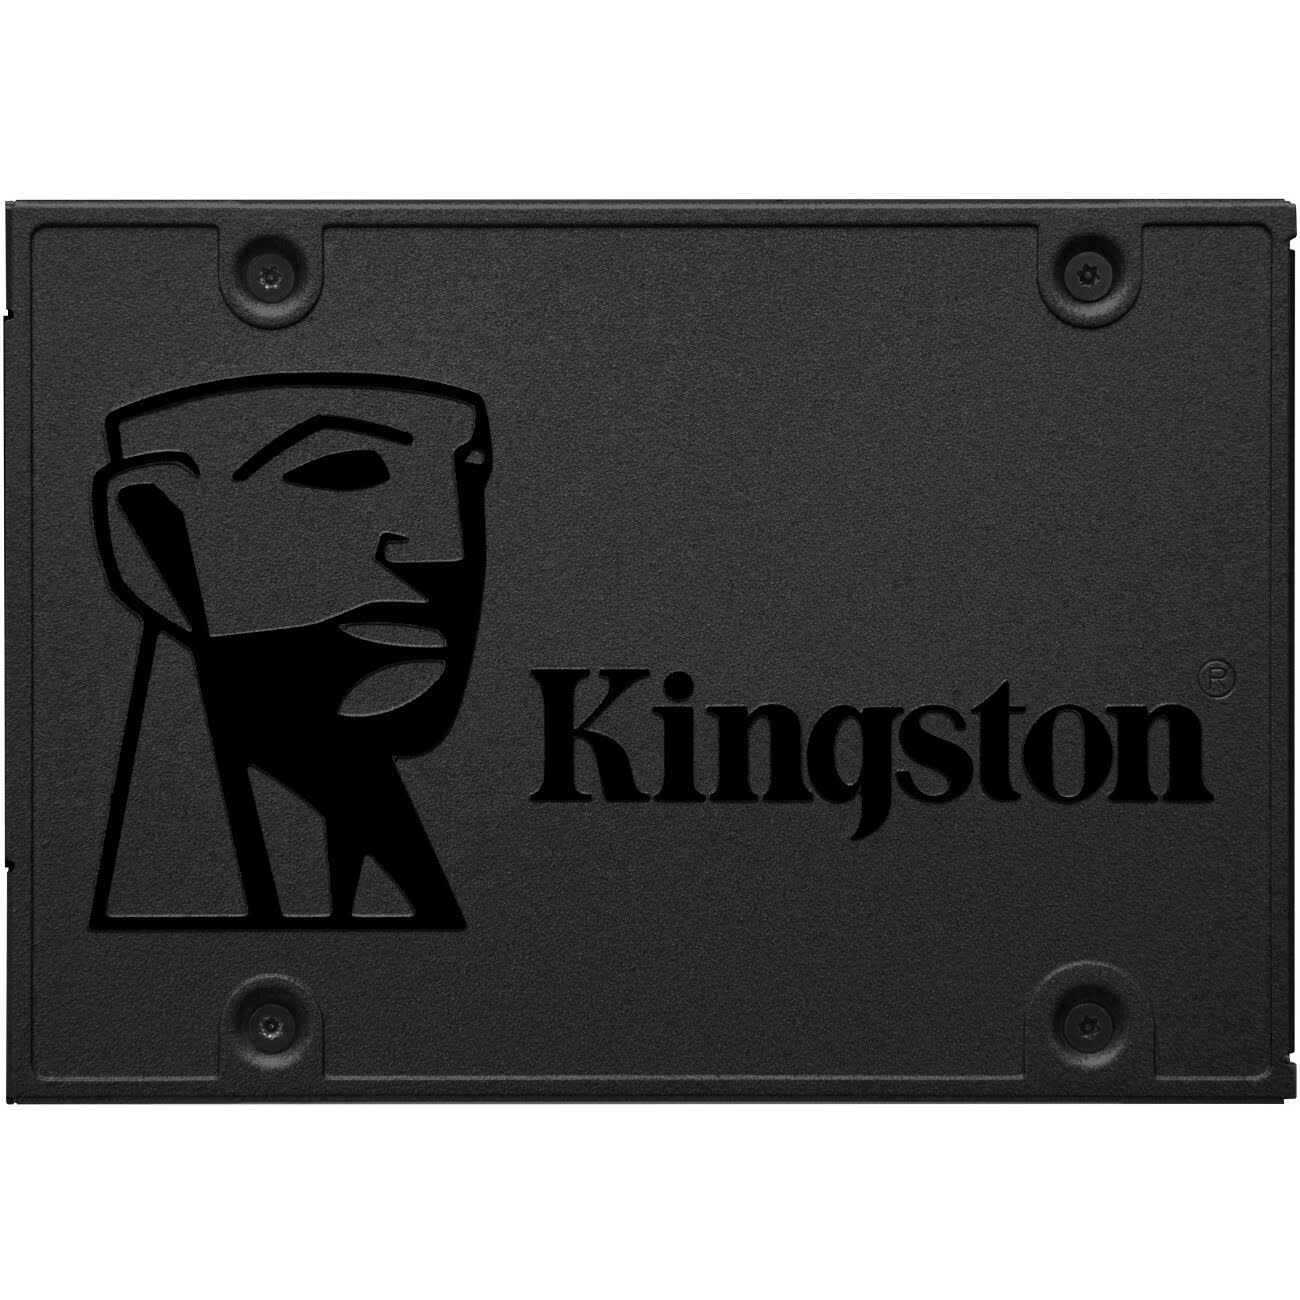 Kingston A400 SSD Sata 3 Solid State Drive - 960gb, 2.5"